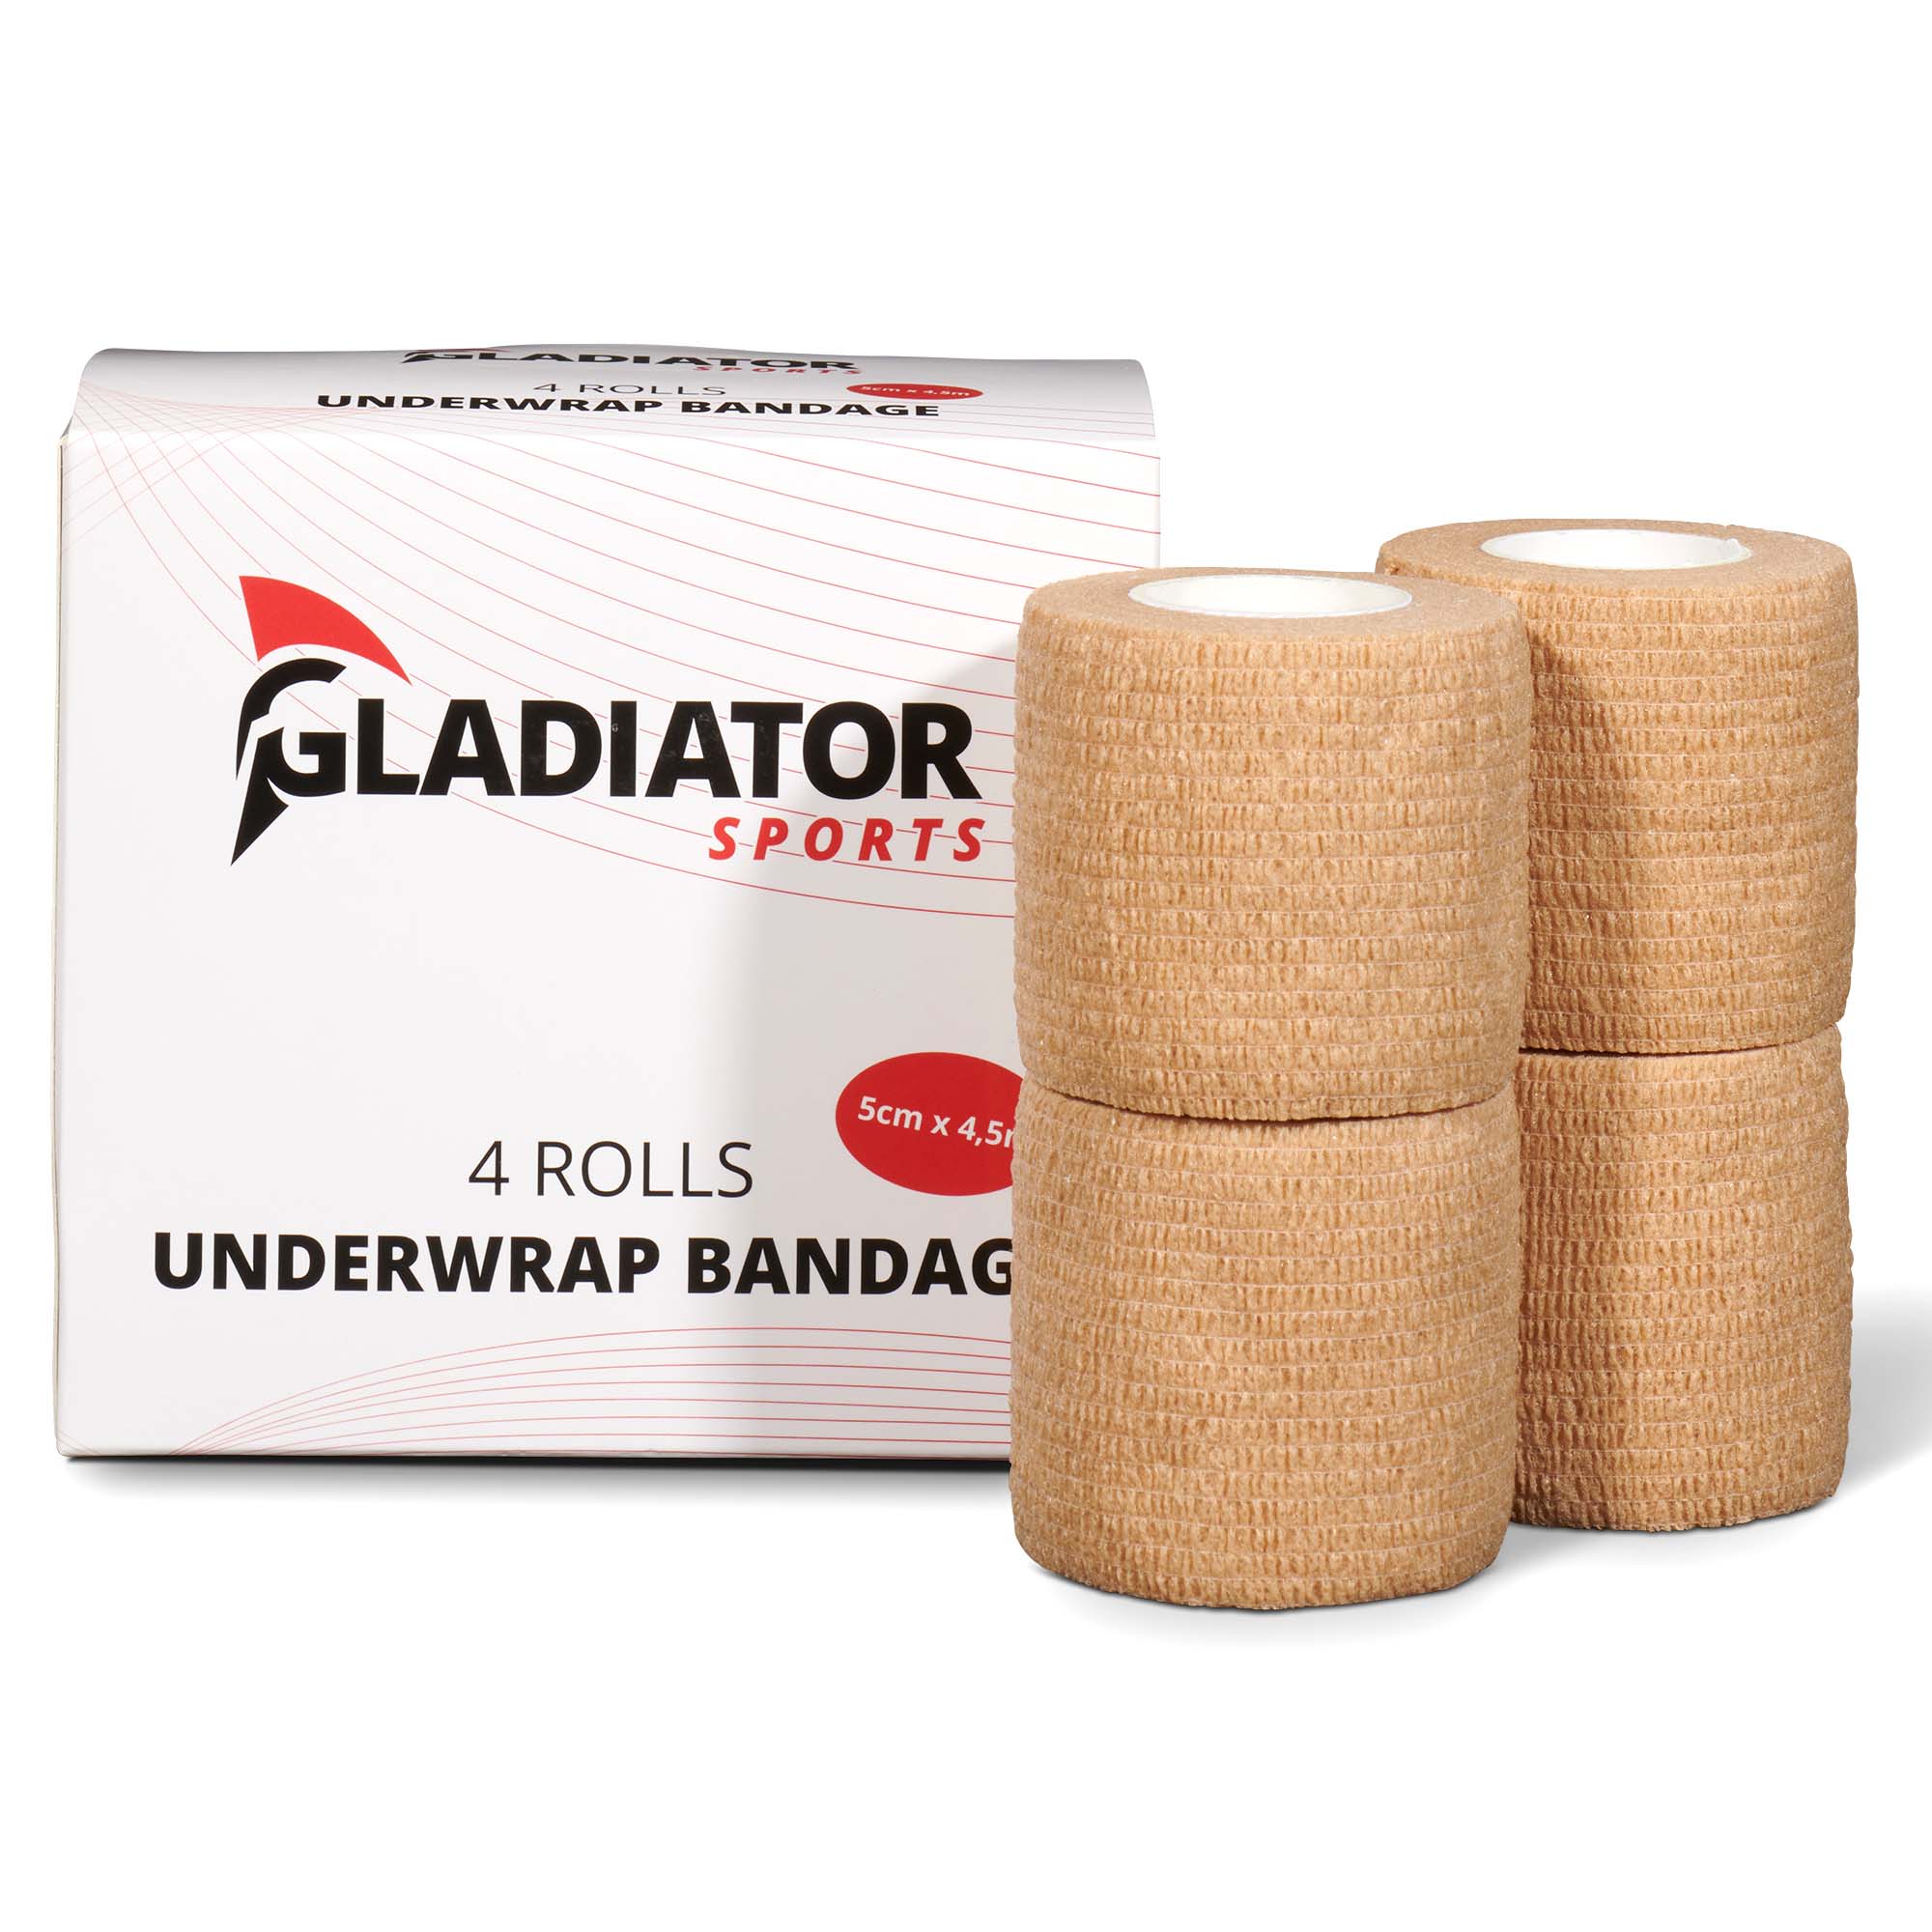 Gladiator Sports underwrap bandage 4 rolls with box beige